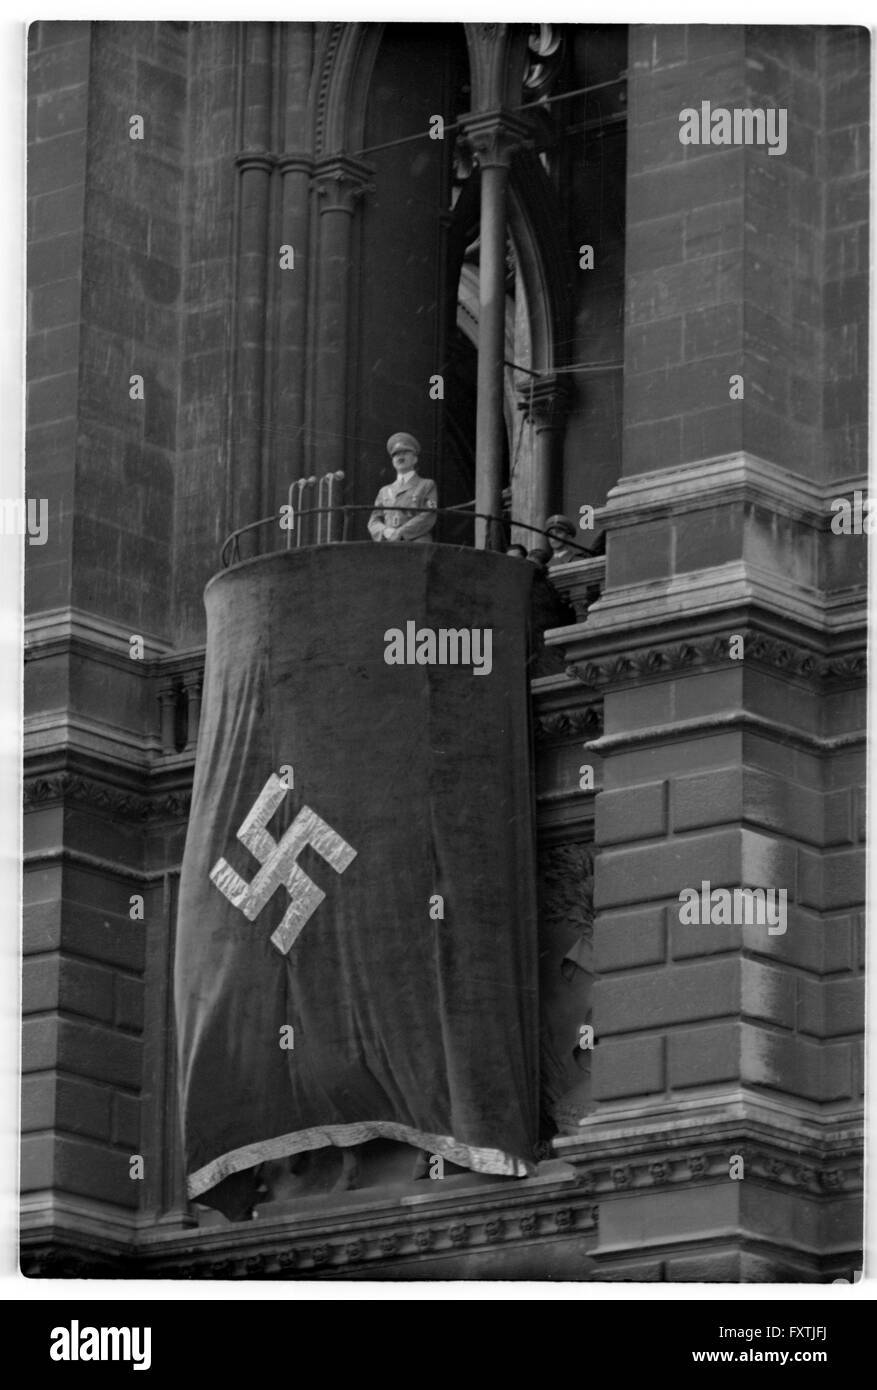 Volksabstimmung April 1938 Stock Photo